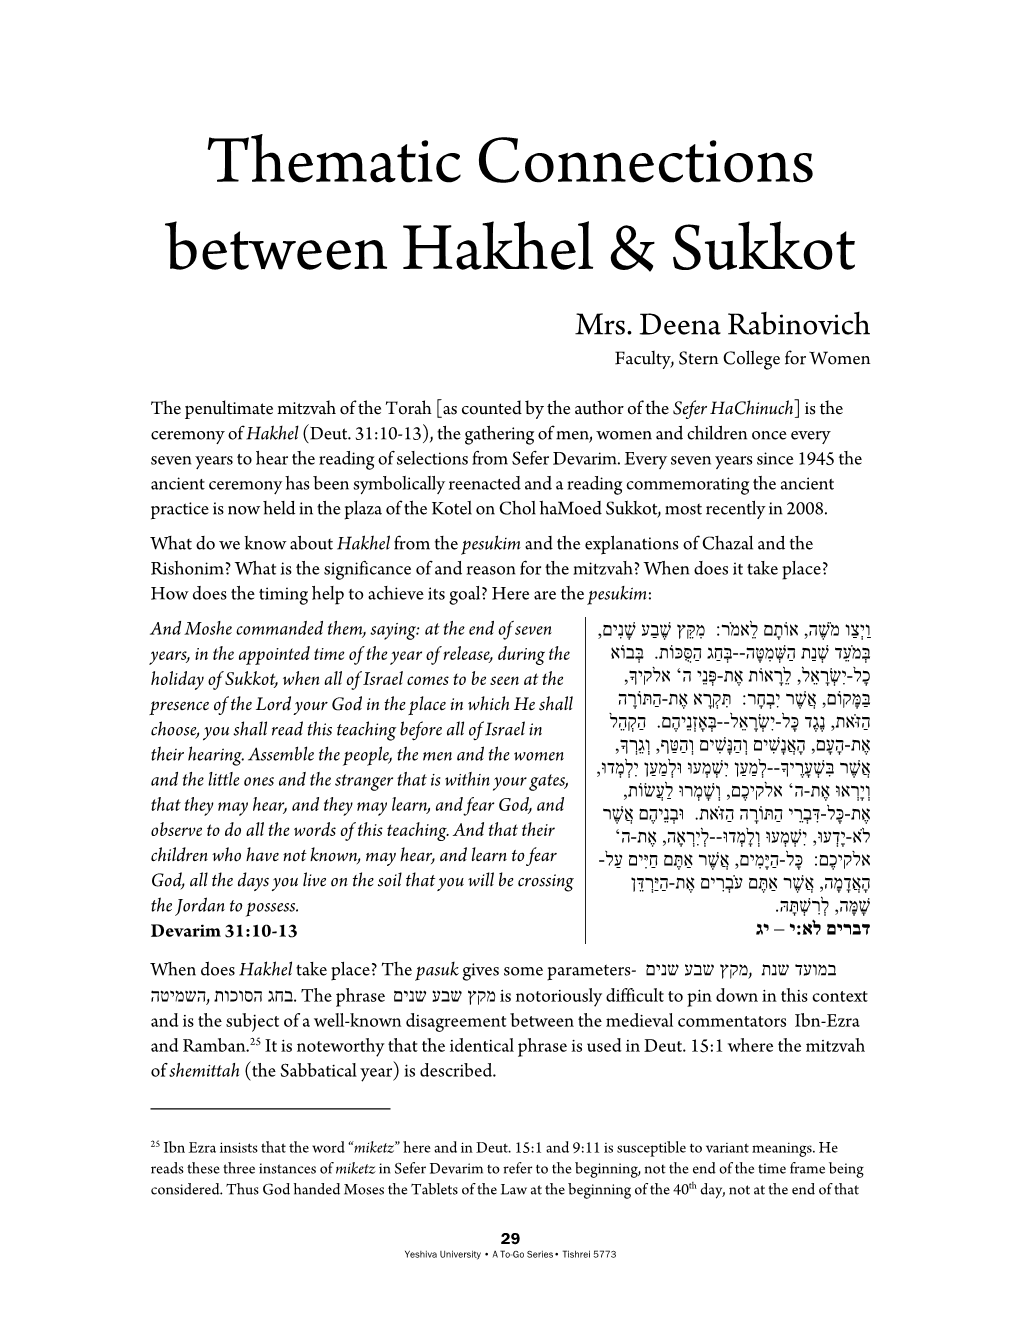 Thematic Connections Between Hakhel & Sukkot